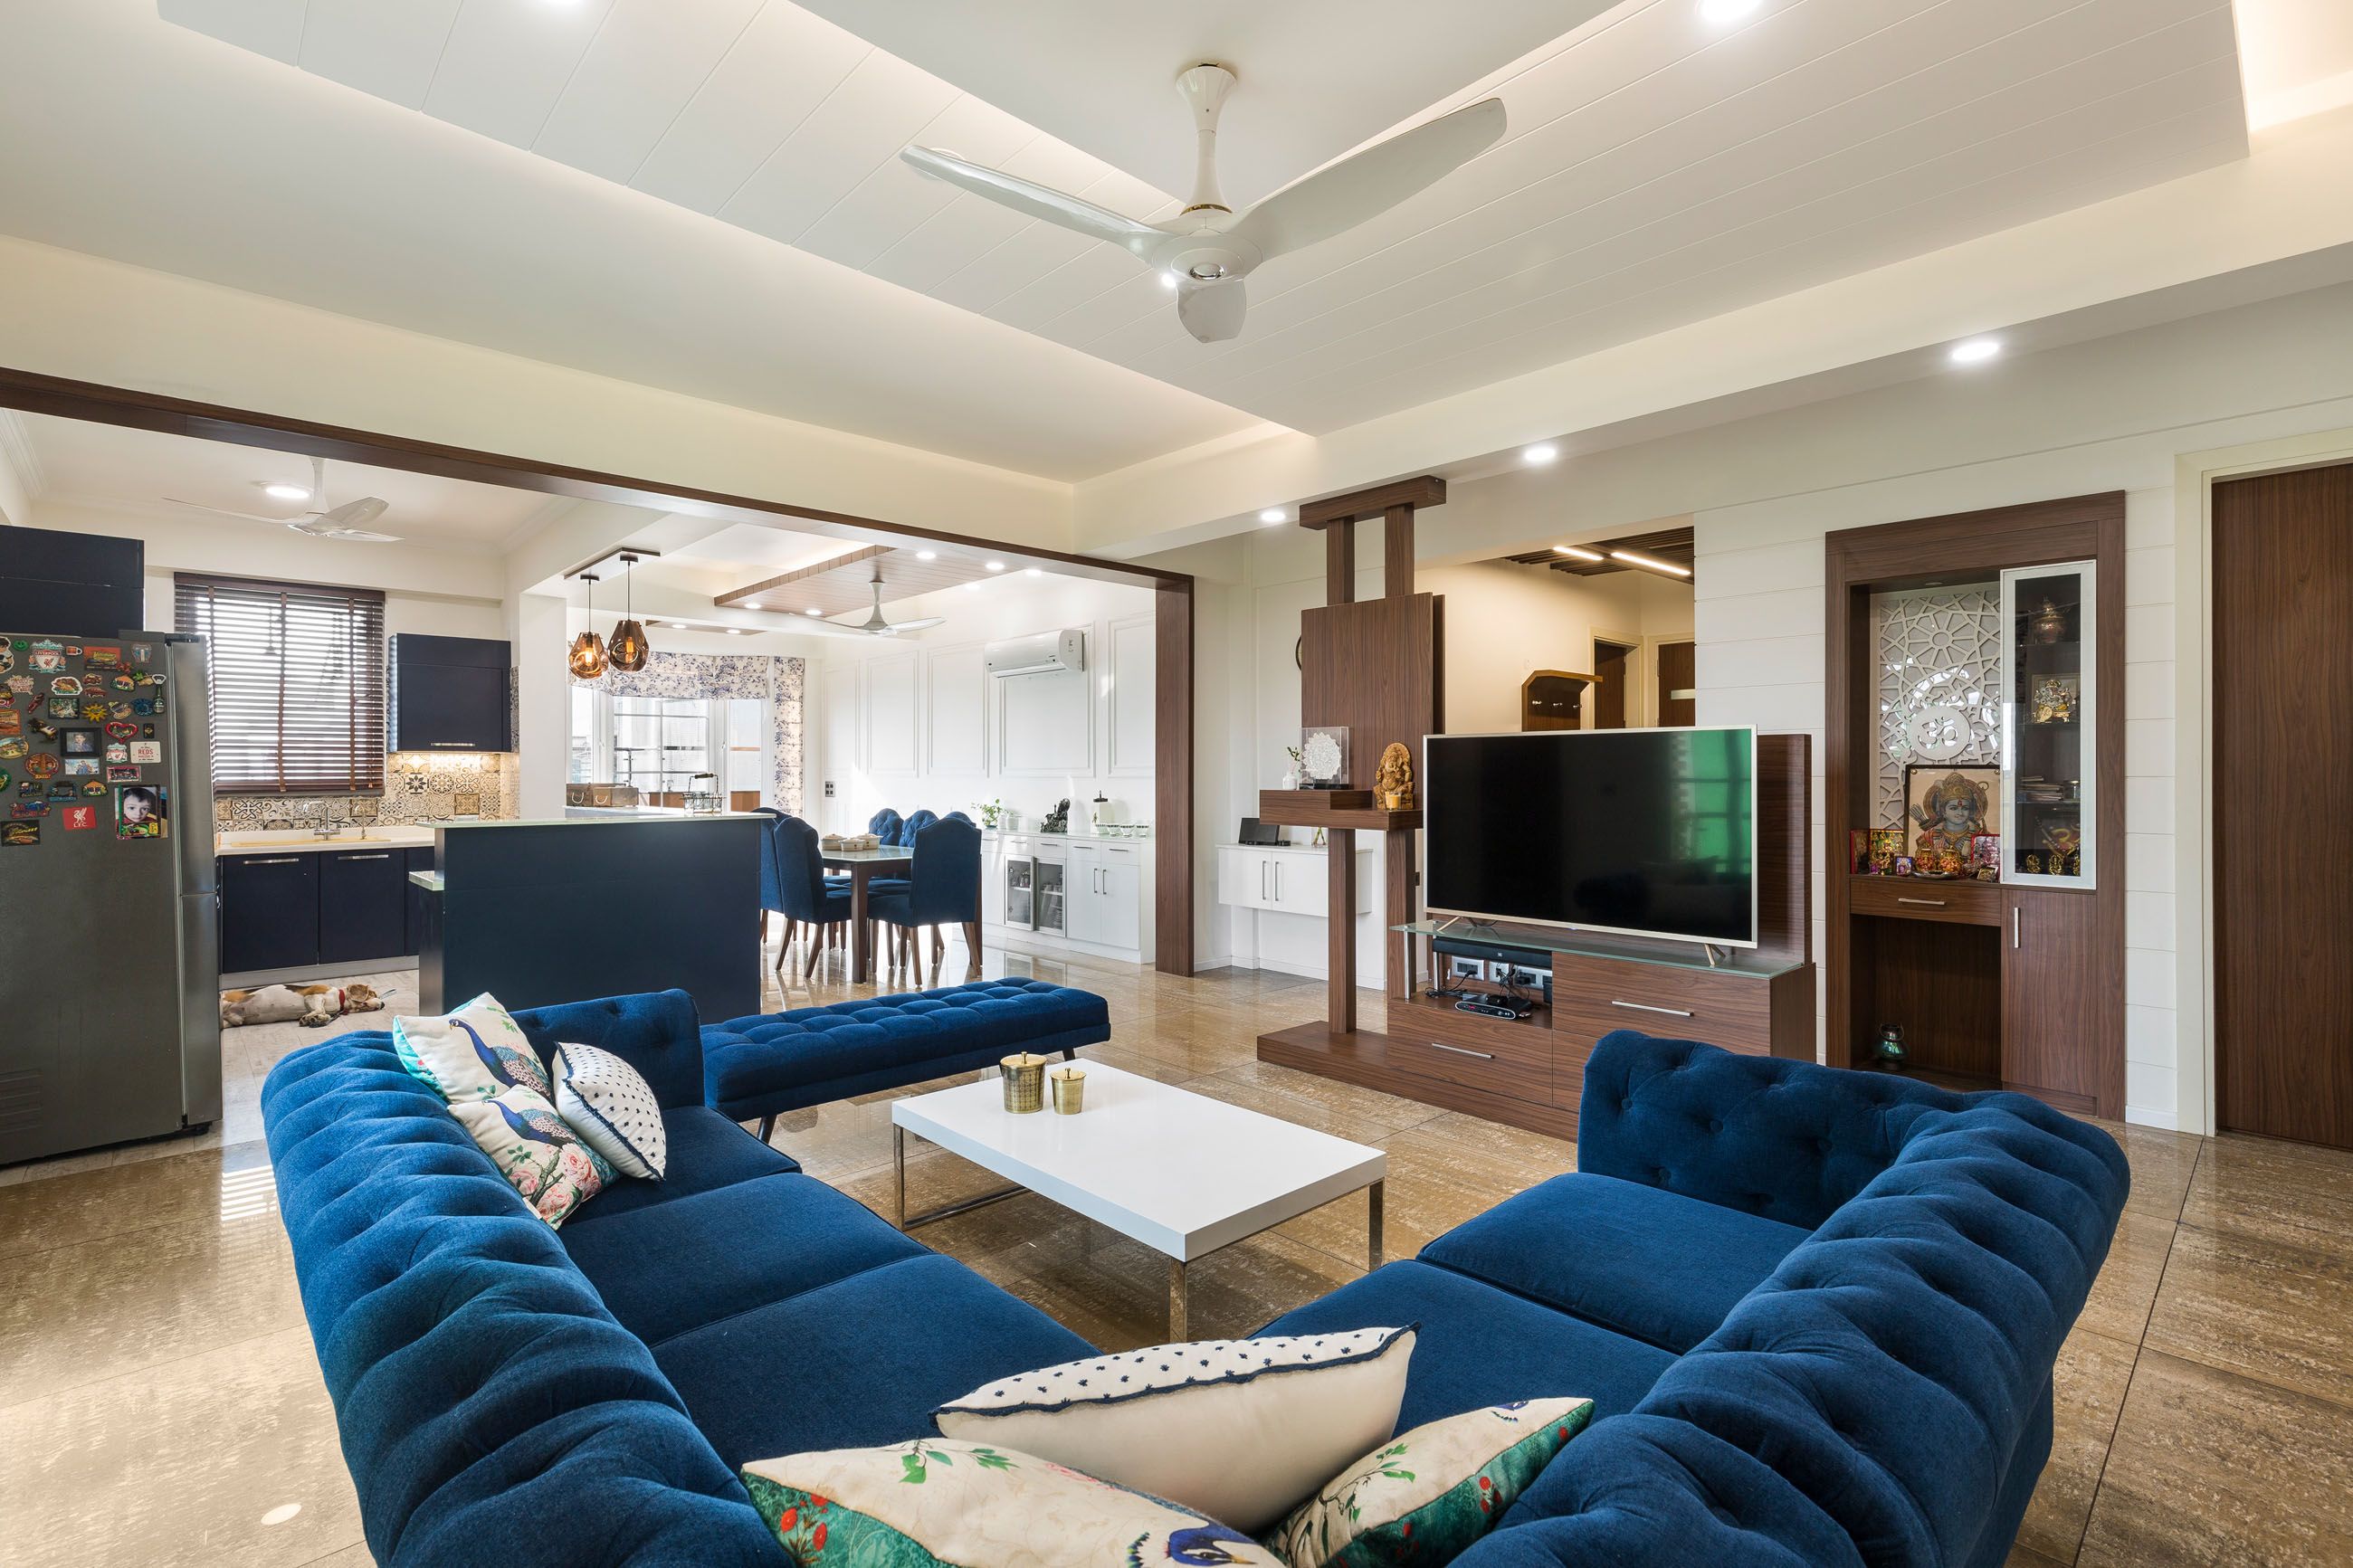 3-BHK Flat In Noida With U Shape Blue Living Room Design | Livspace